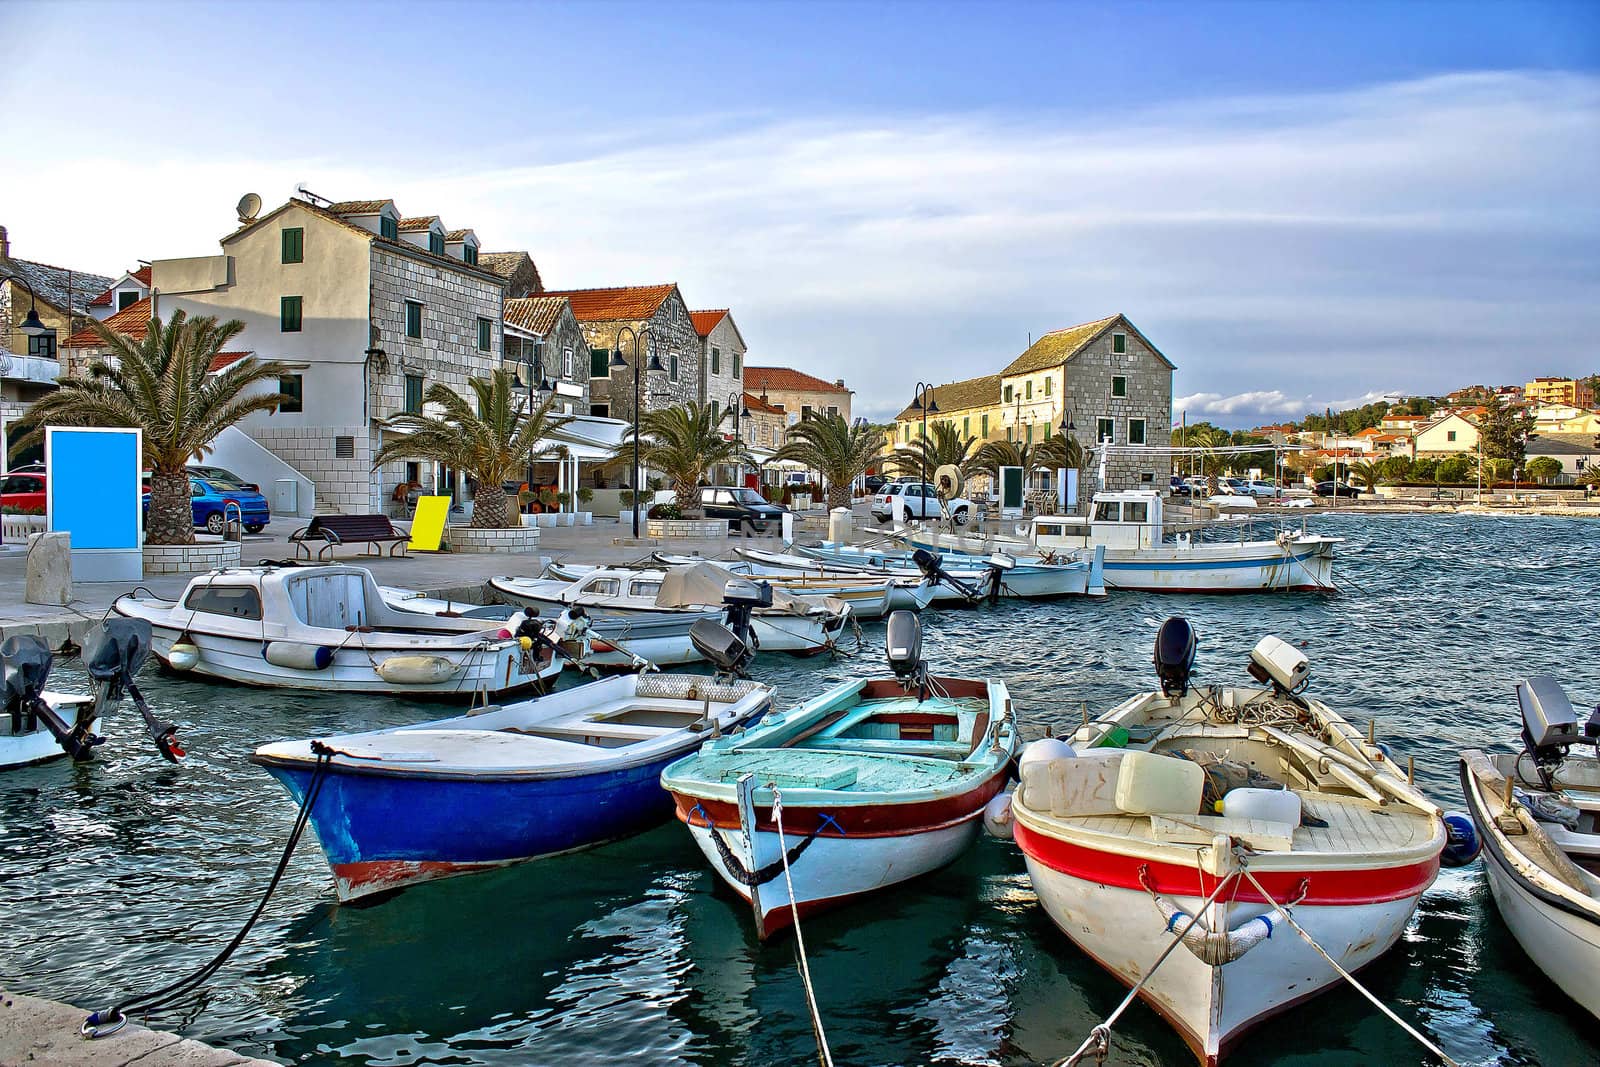 Dalmatian town of Primosten harbor, Dalmatia, Croatia